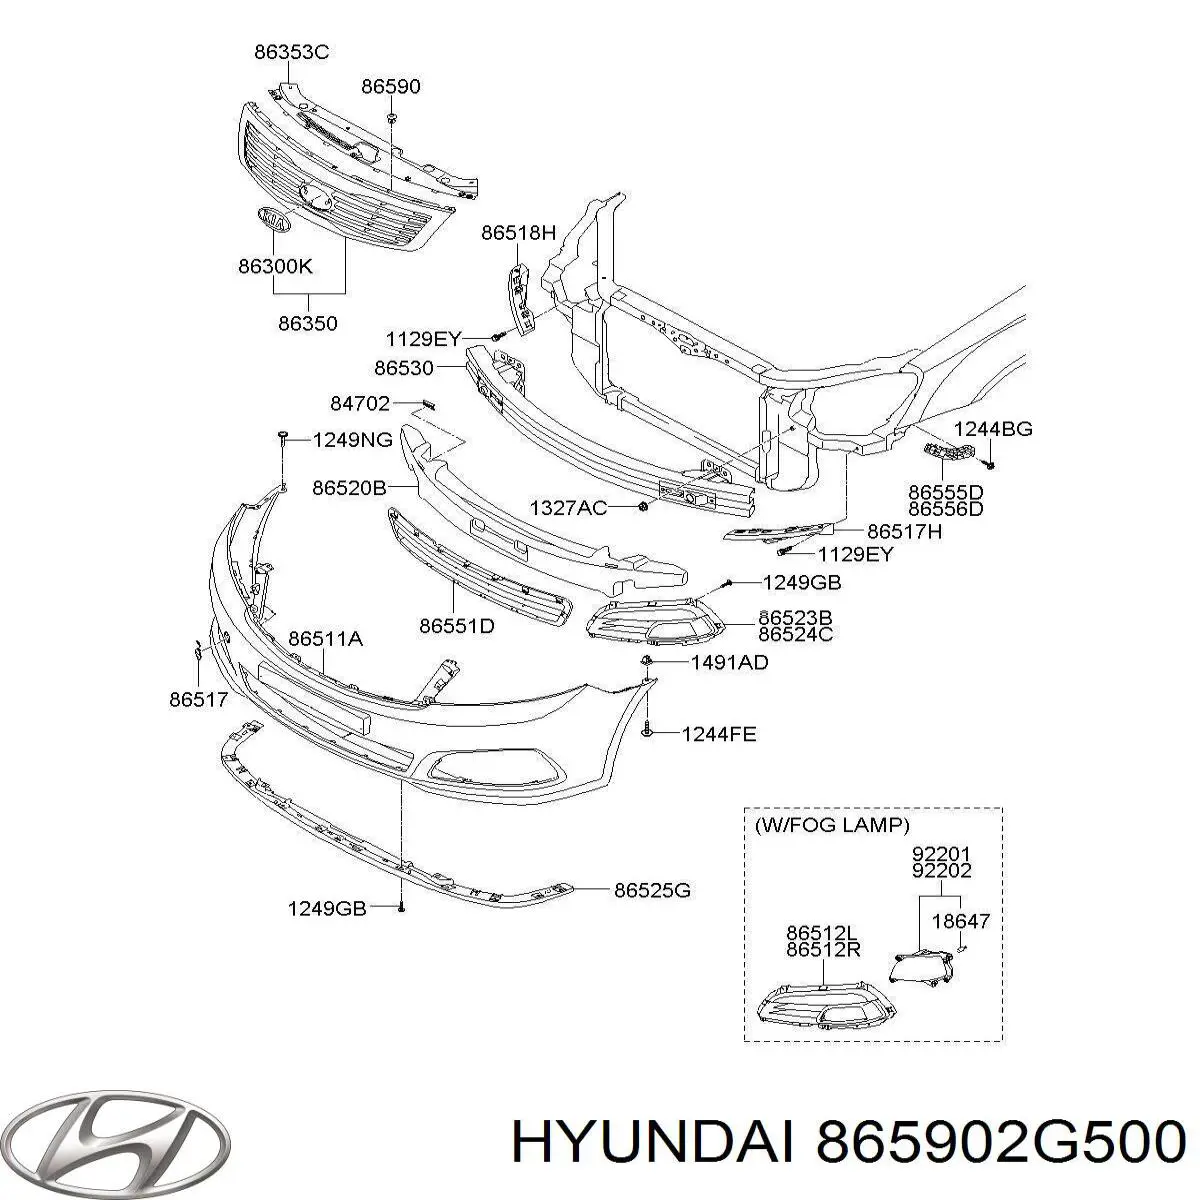 865902G500 Hyundai/Kia alerón delantero